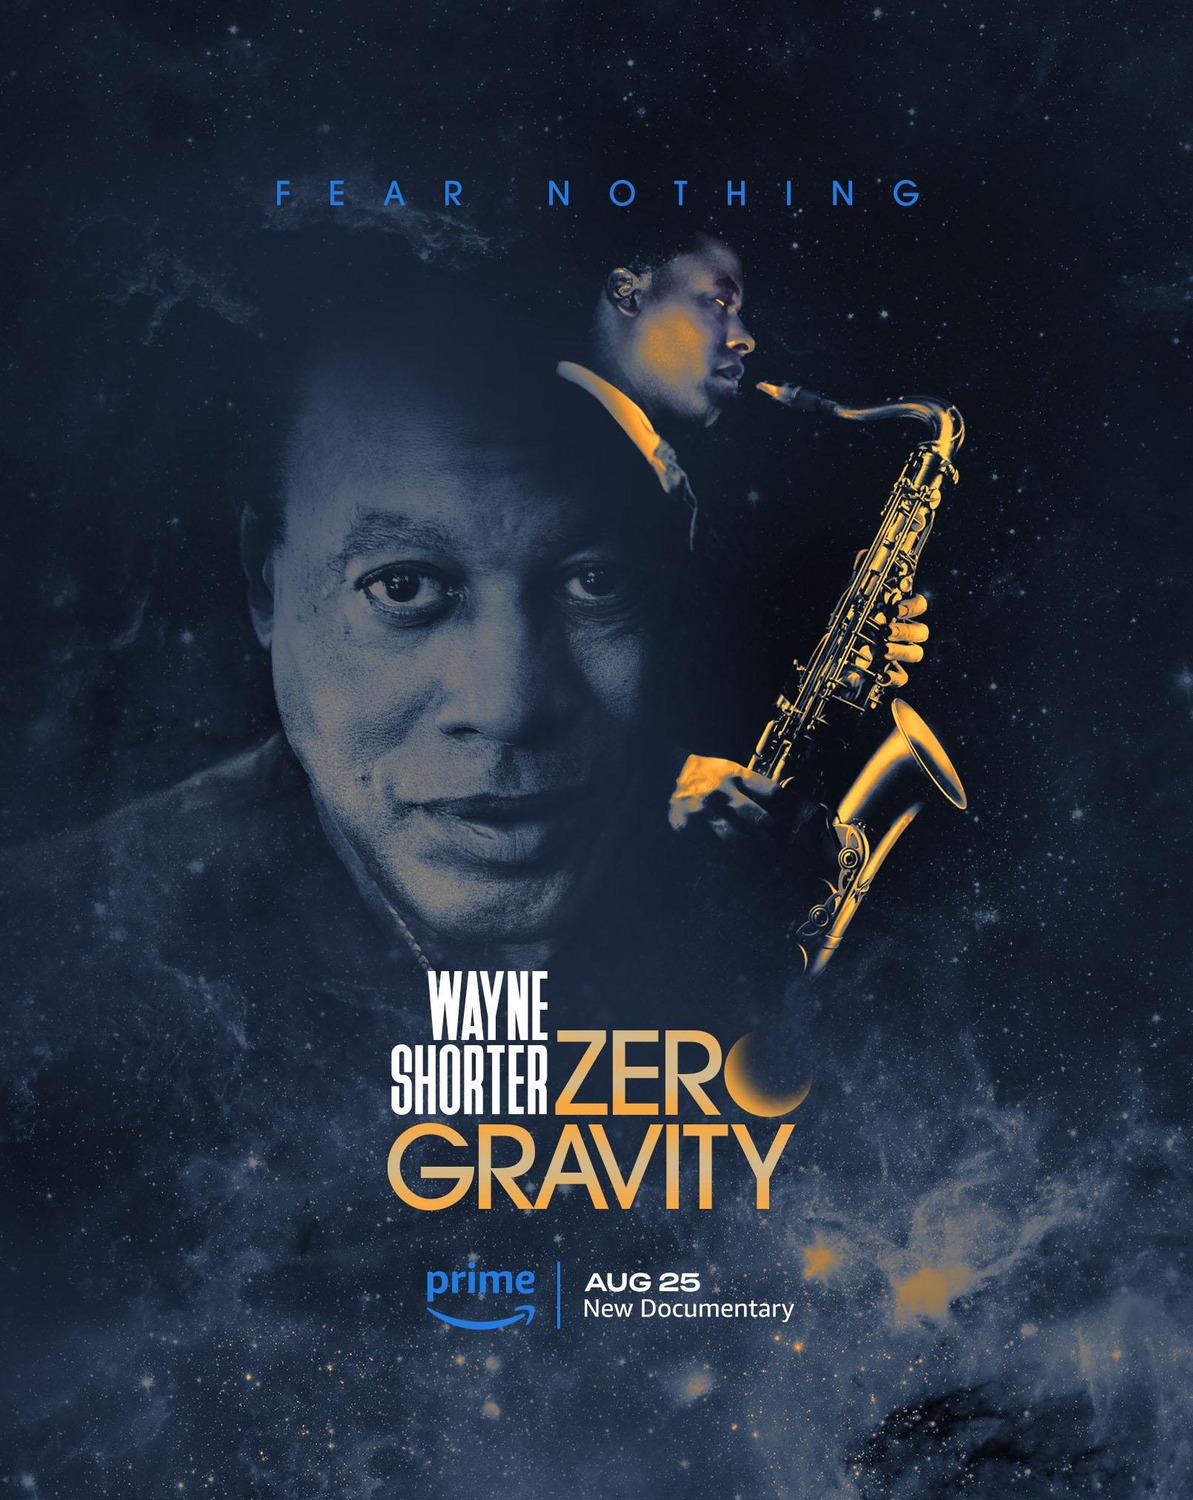 Extra Large TV Poster Image for Wayne Shorter: Zero Gravity 